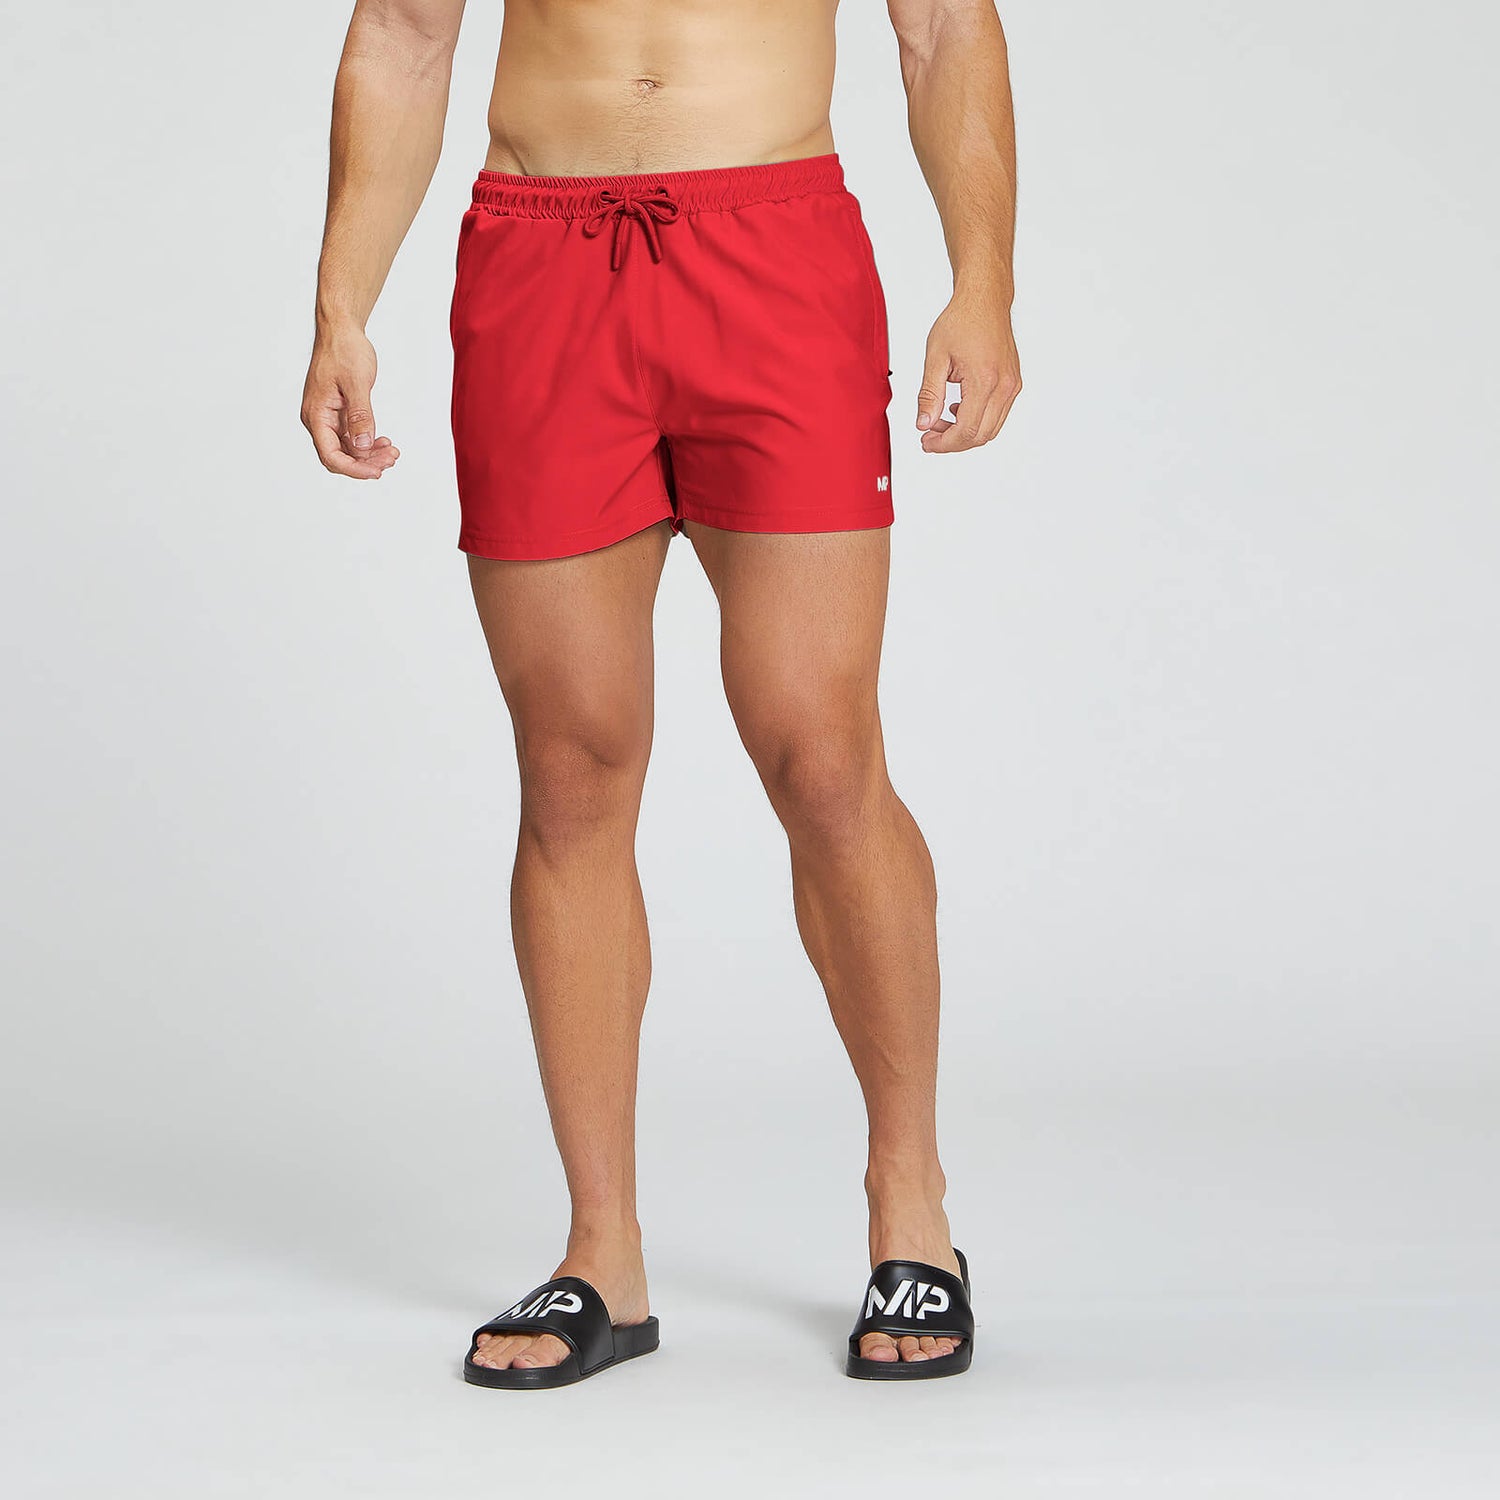 MP Atlantic大西洋系列男士游泳短裤 - 危险红